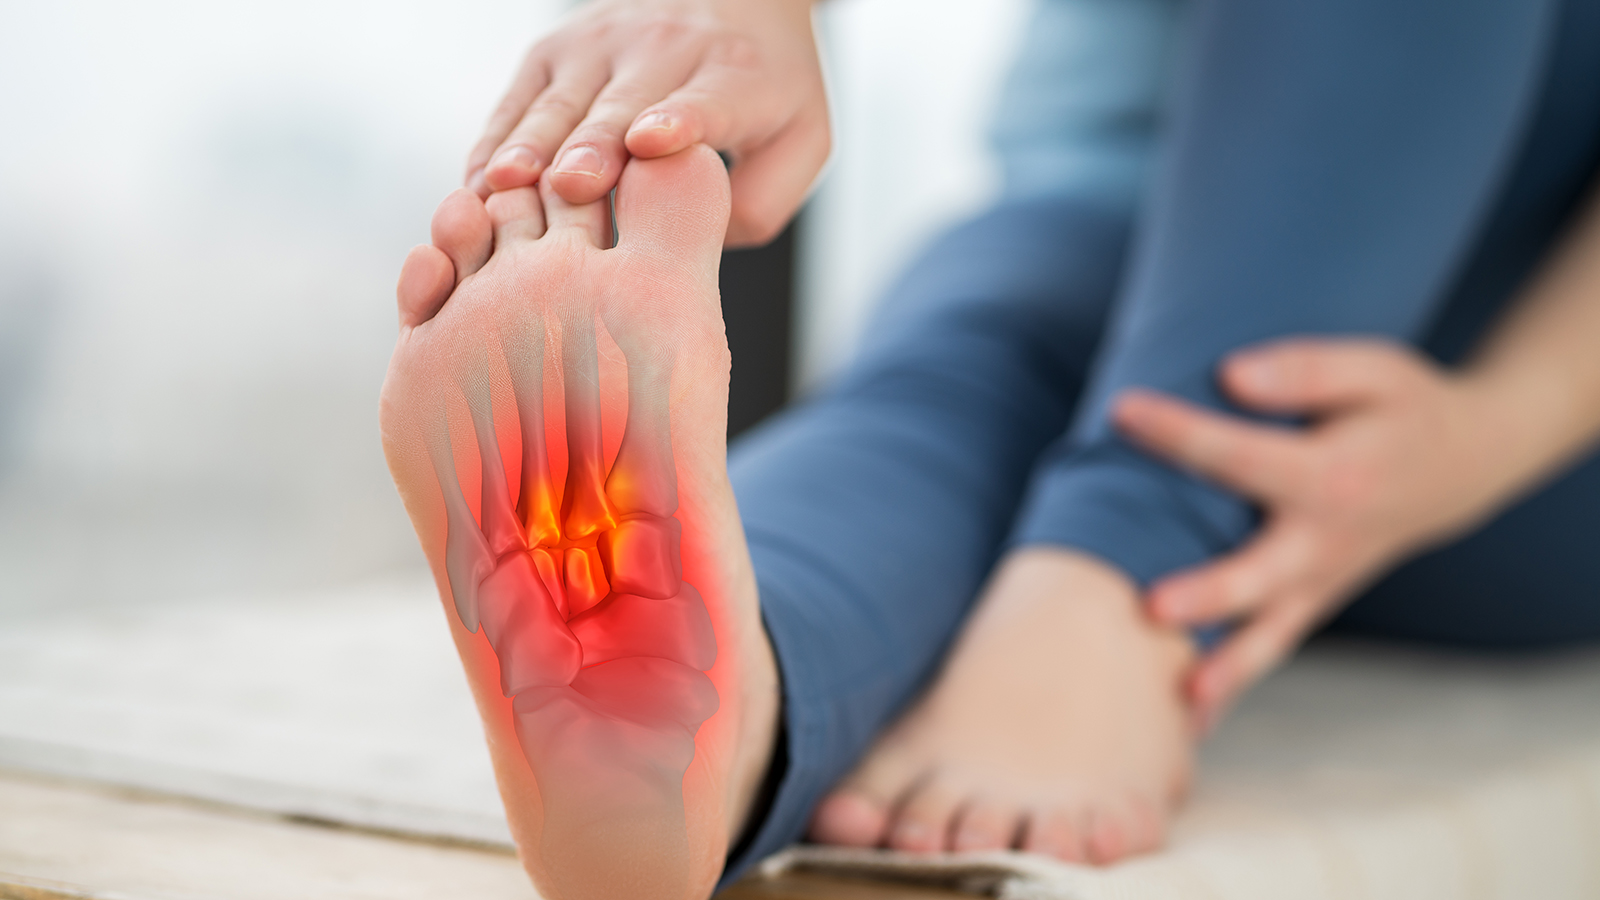 Plantar Fasciitis Exercises & Treatment - Foot Pain Explored